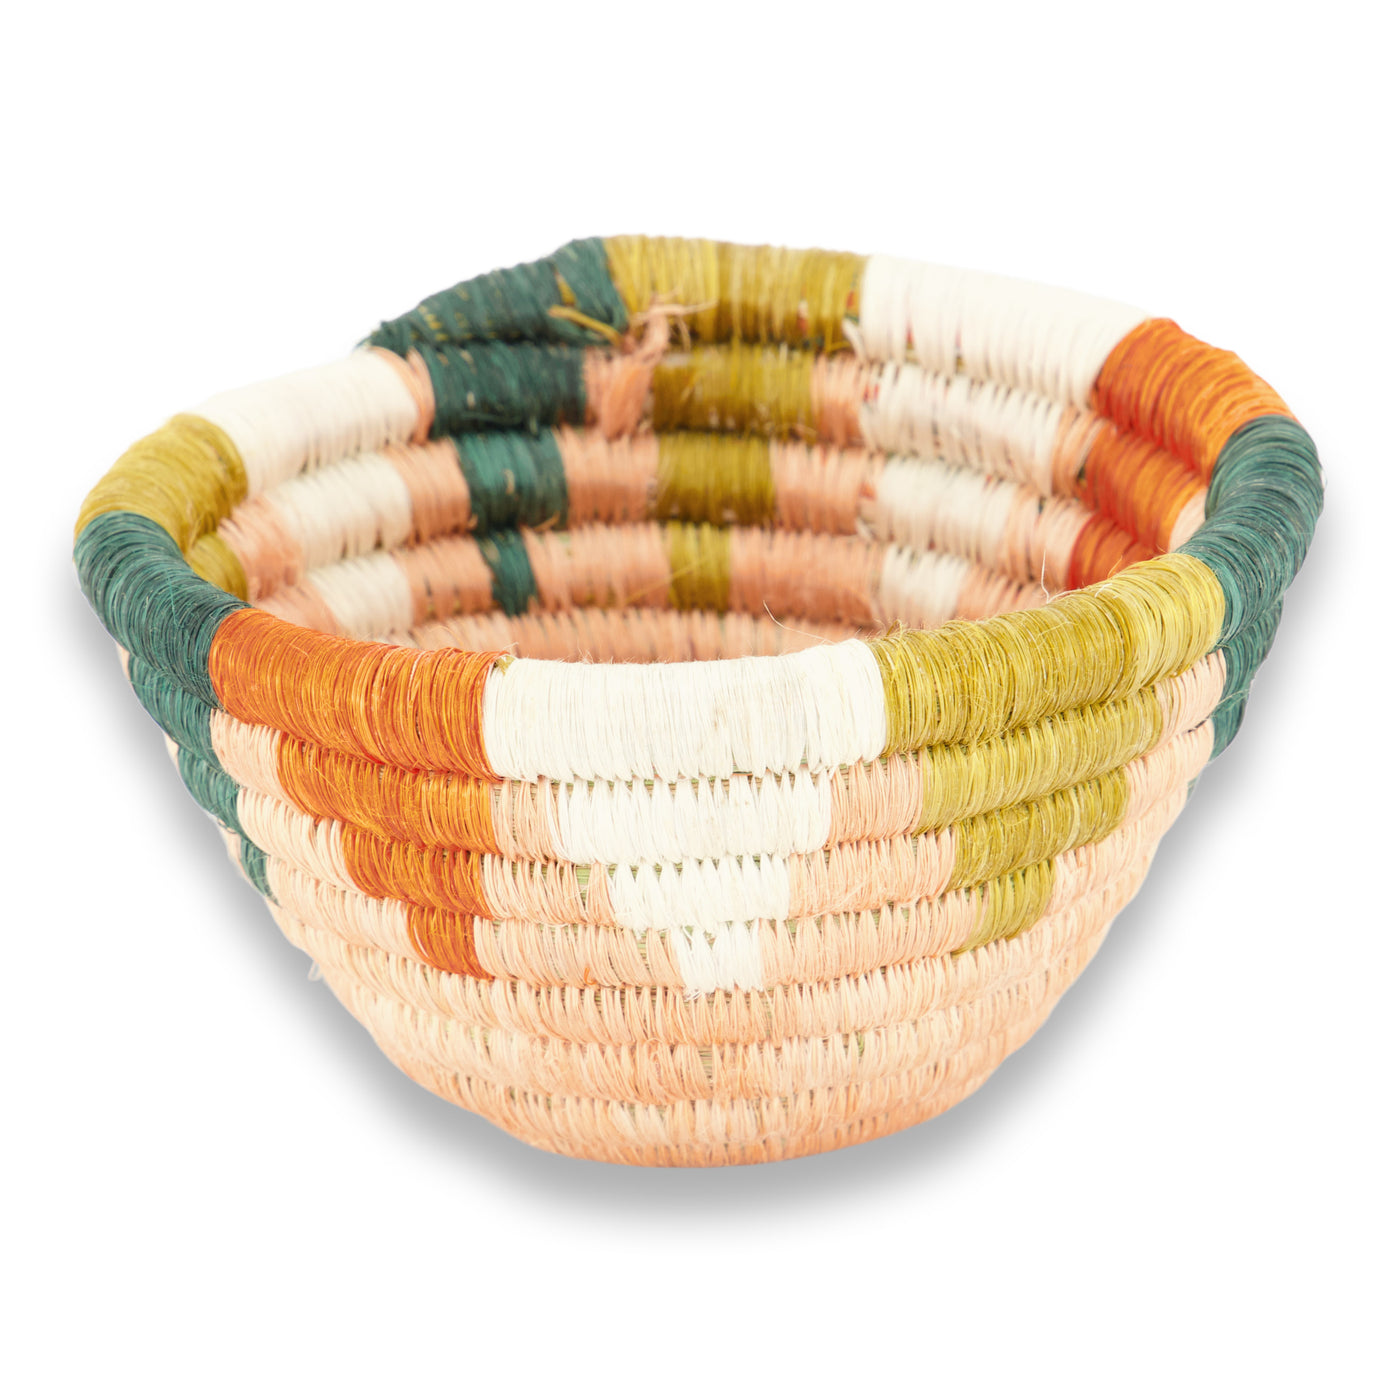 kazi seratonia woven bowl 5" burst pattern peach base with multicolor triangles around rim